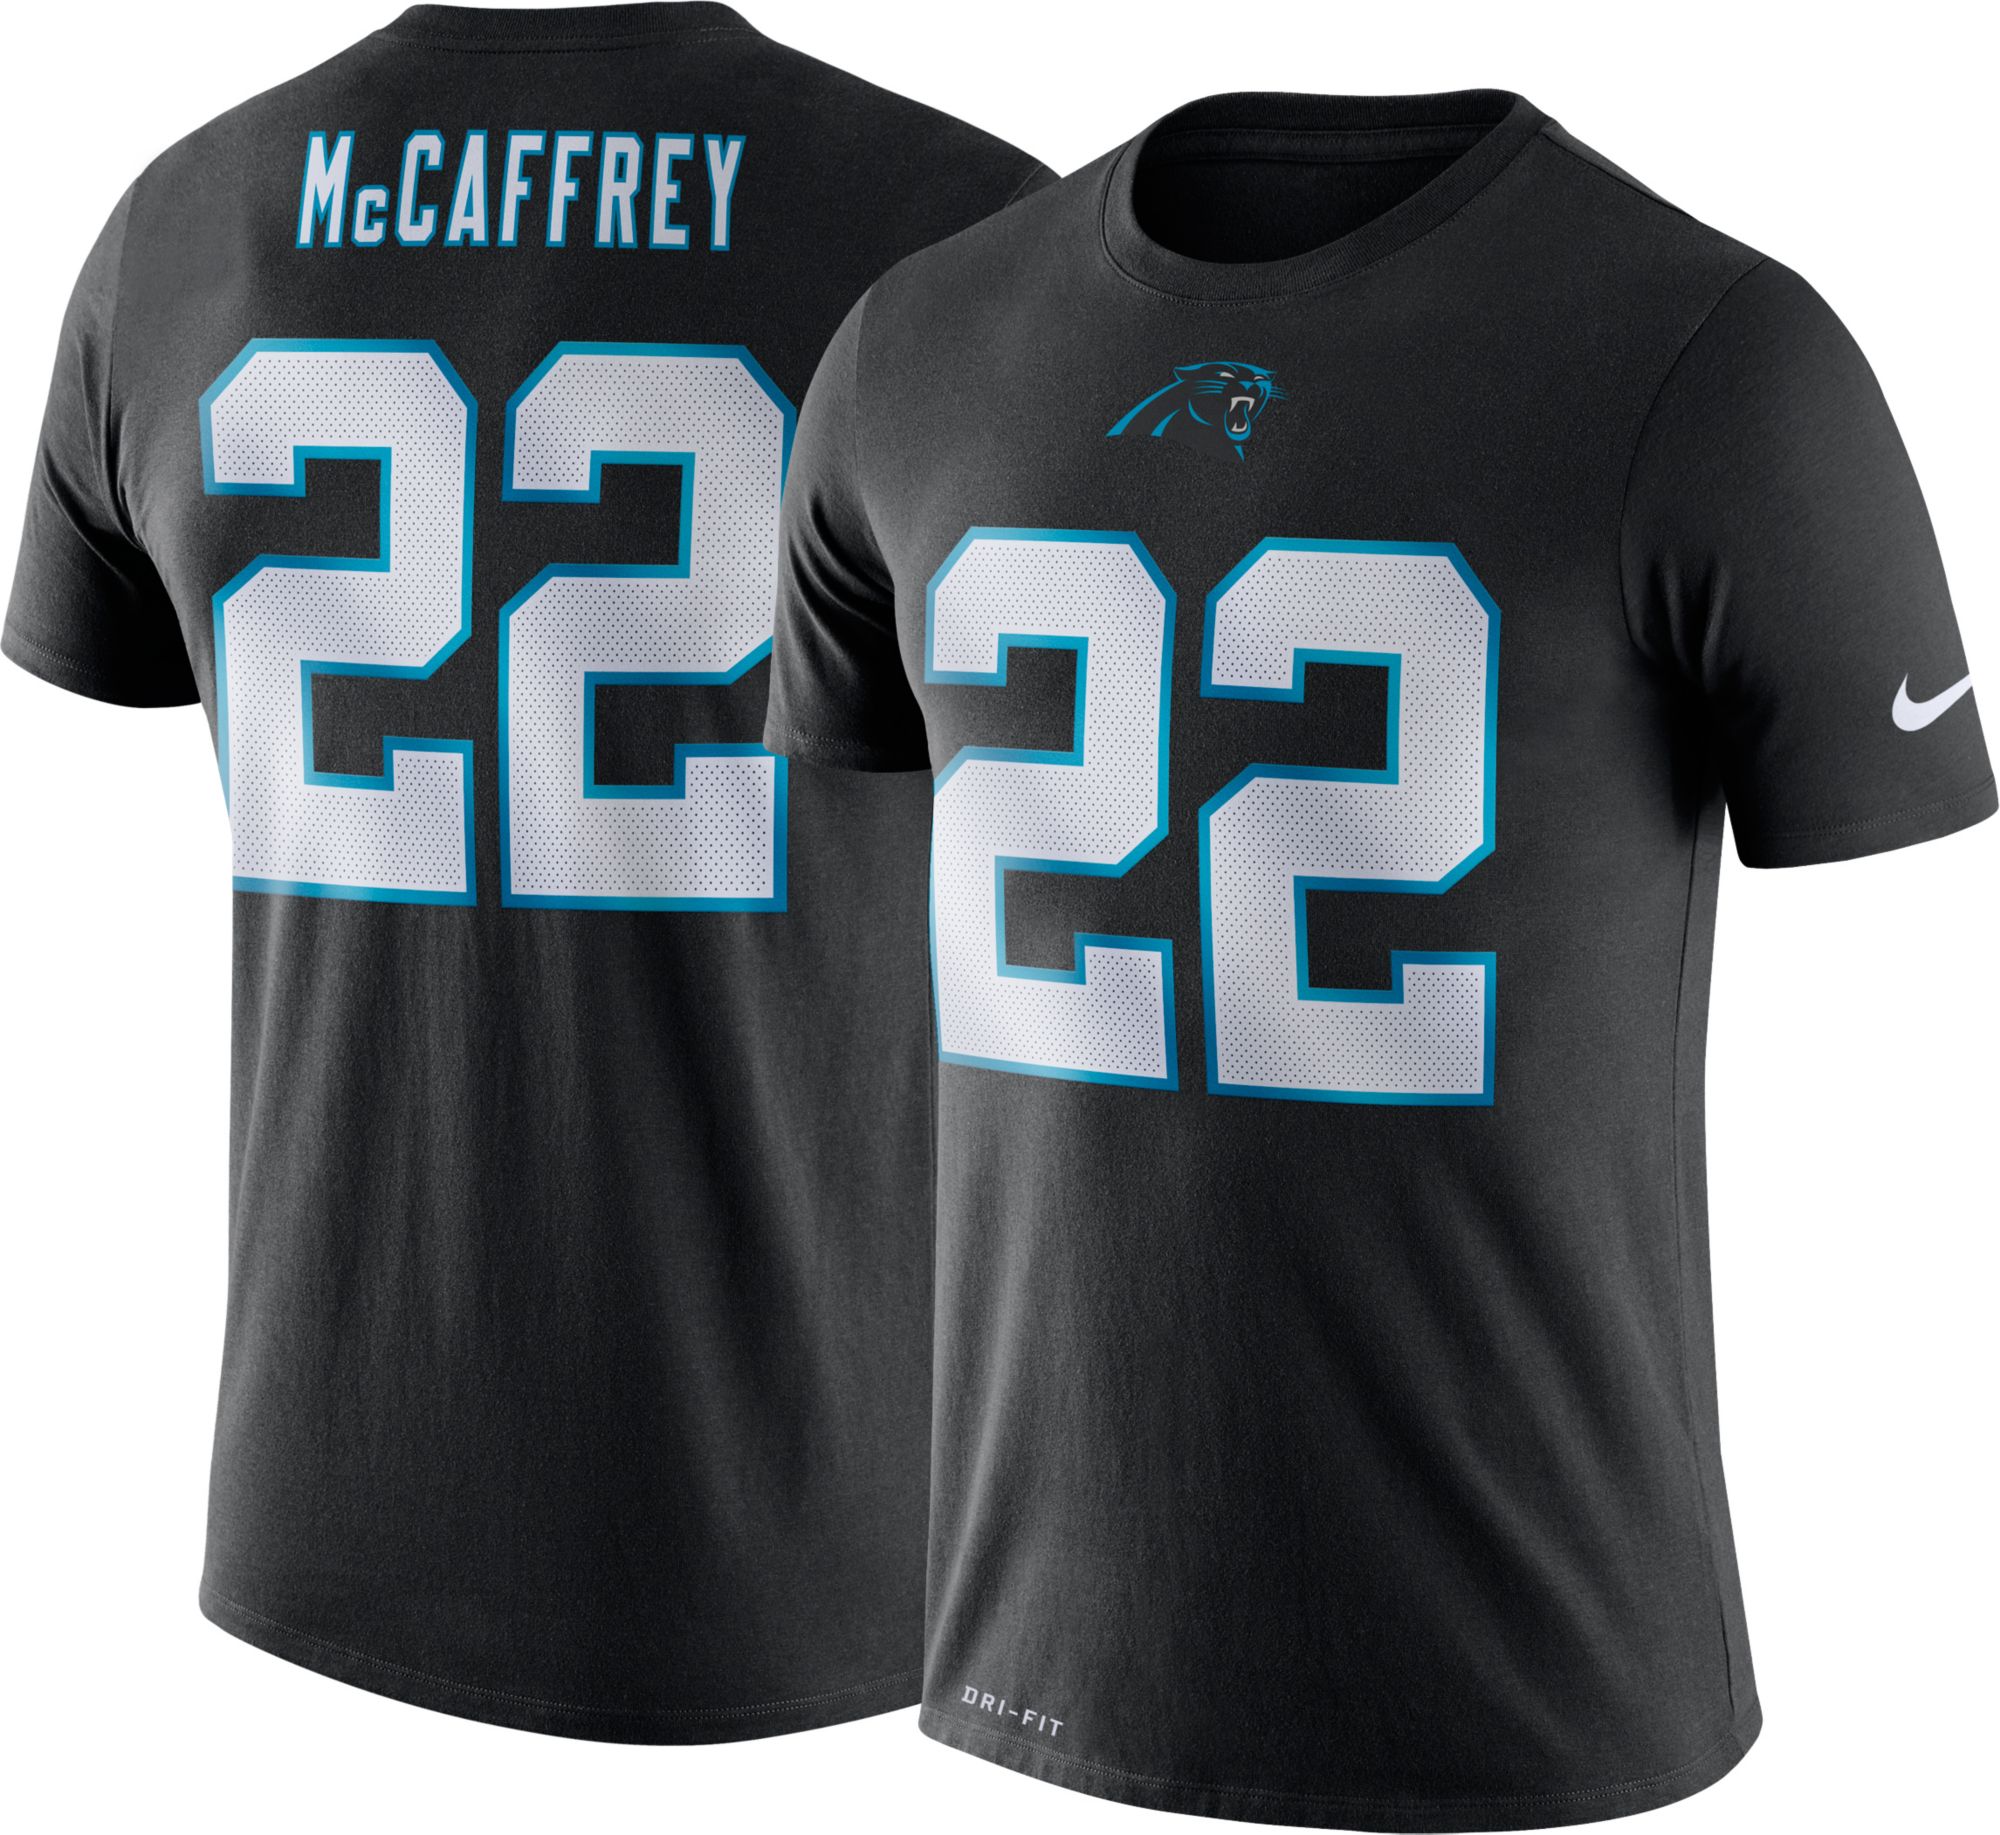 mccaffrey shirt